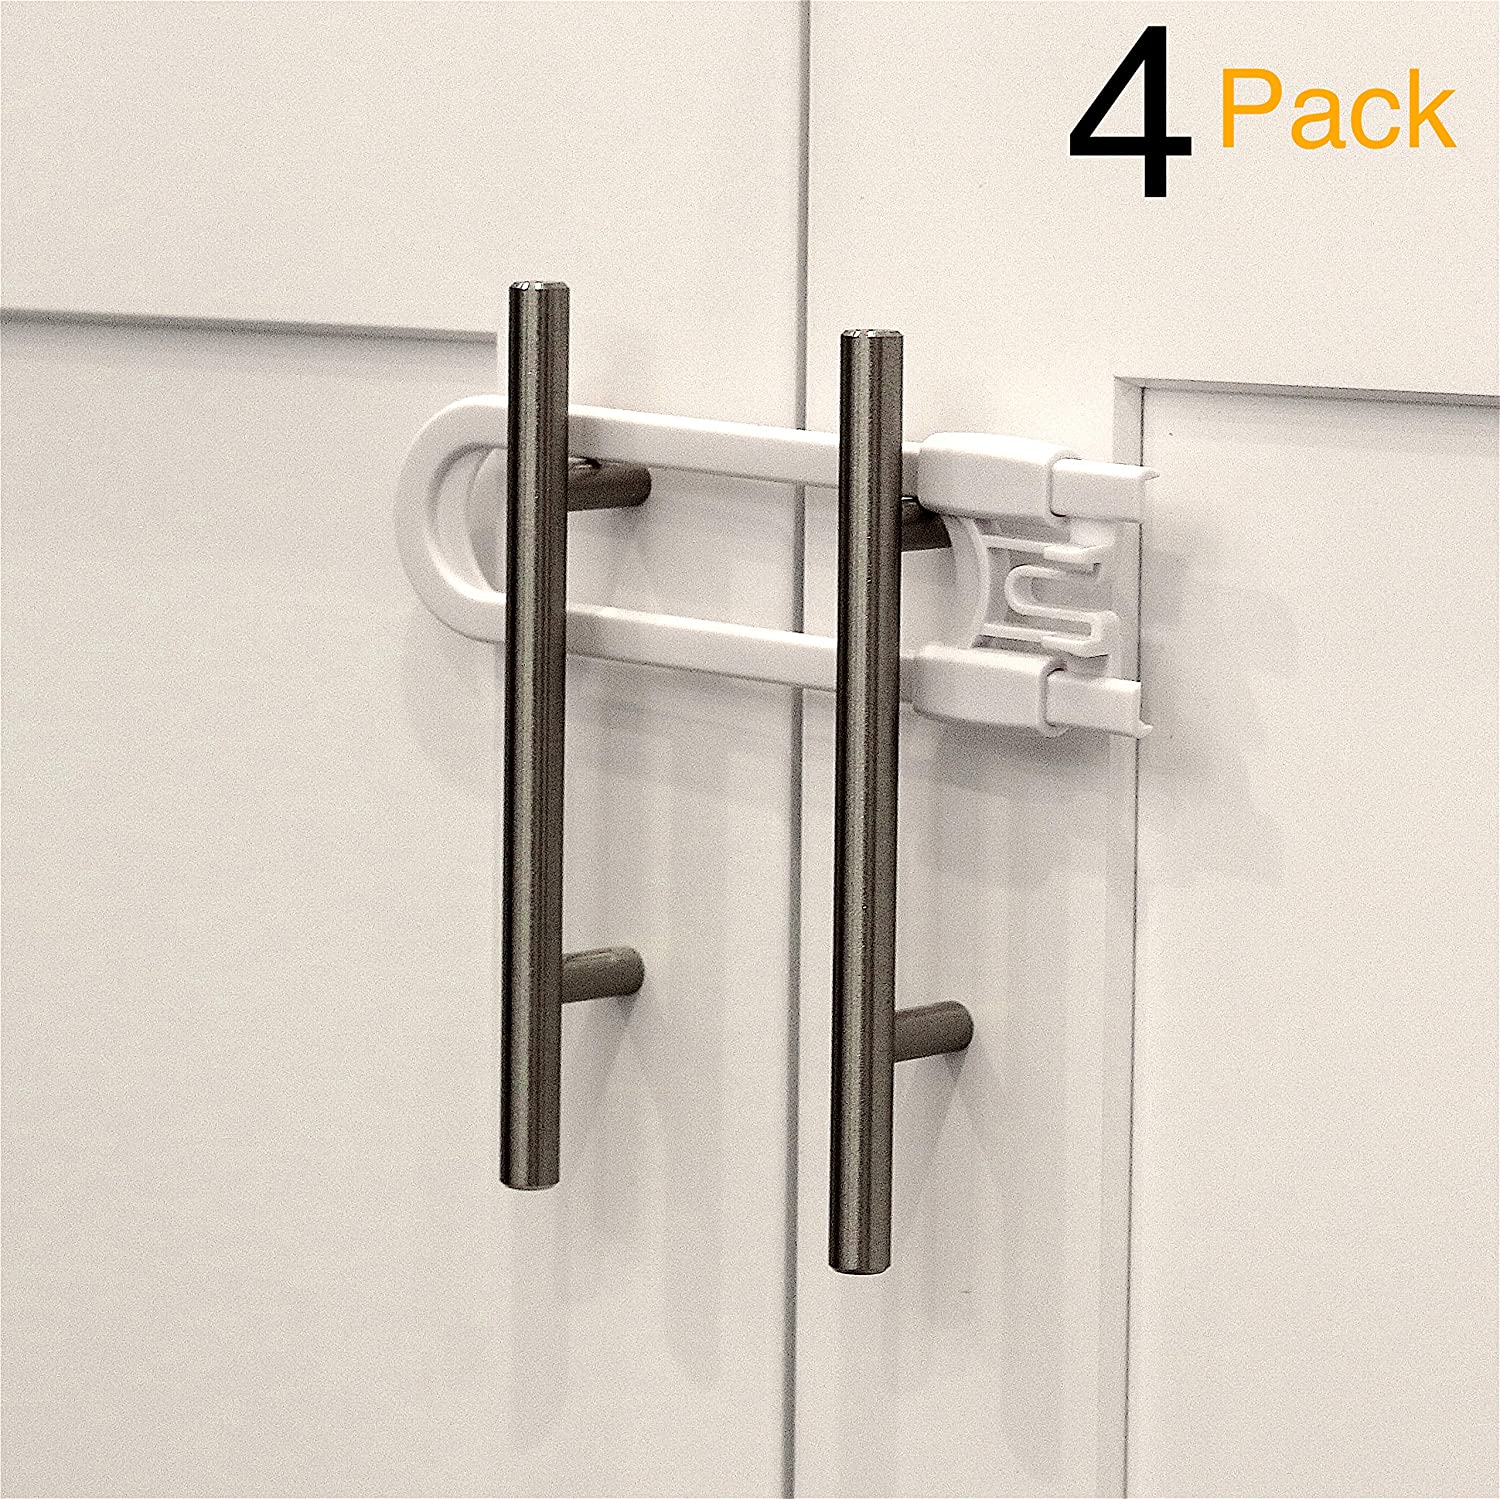 Child Safety Sliding Cabinet Locks (4 Pack) - Baby Proof Knobs, Handles, Doors - U Shape Sliding Safety Latch Lock by Jool Baby